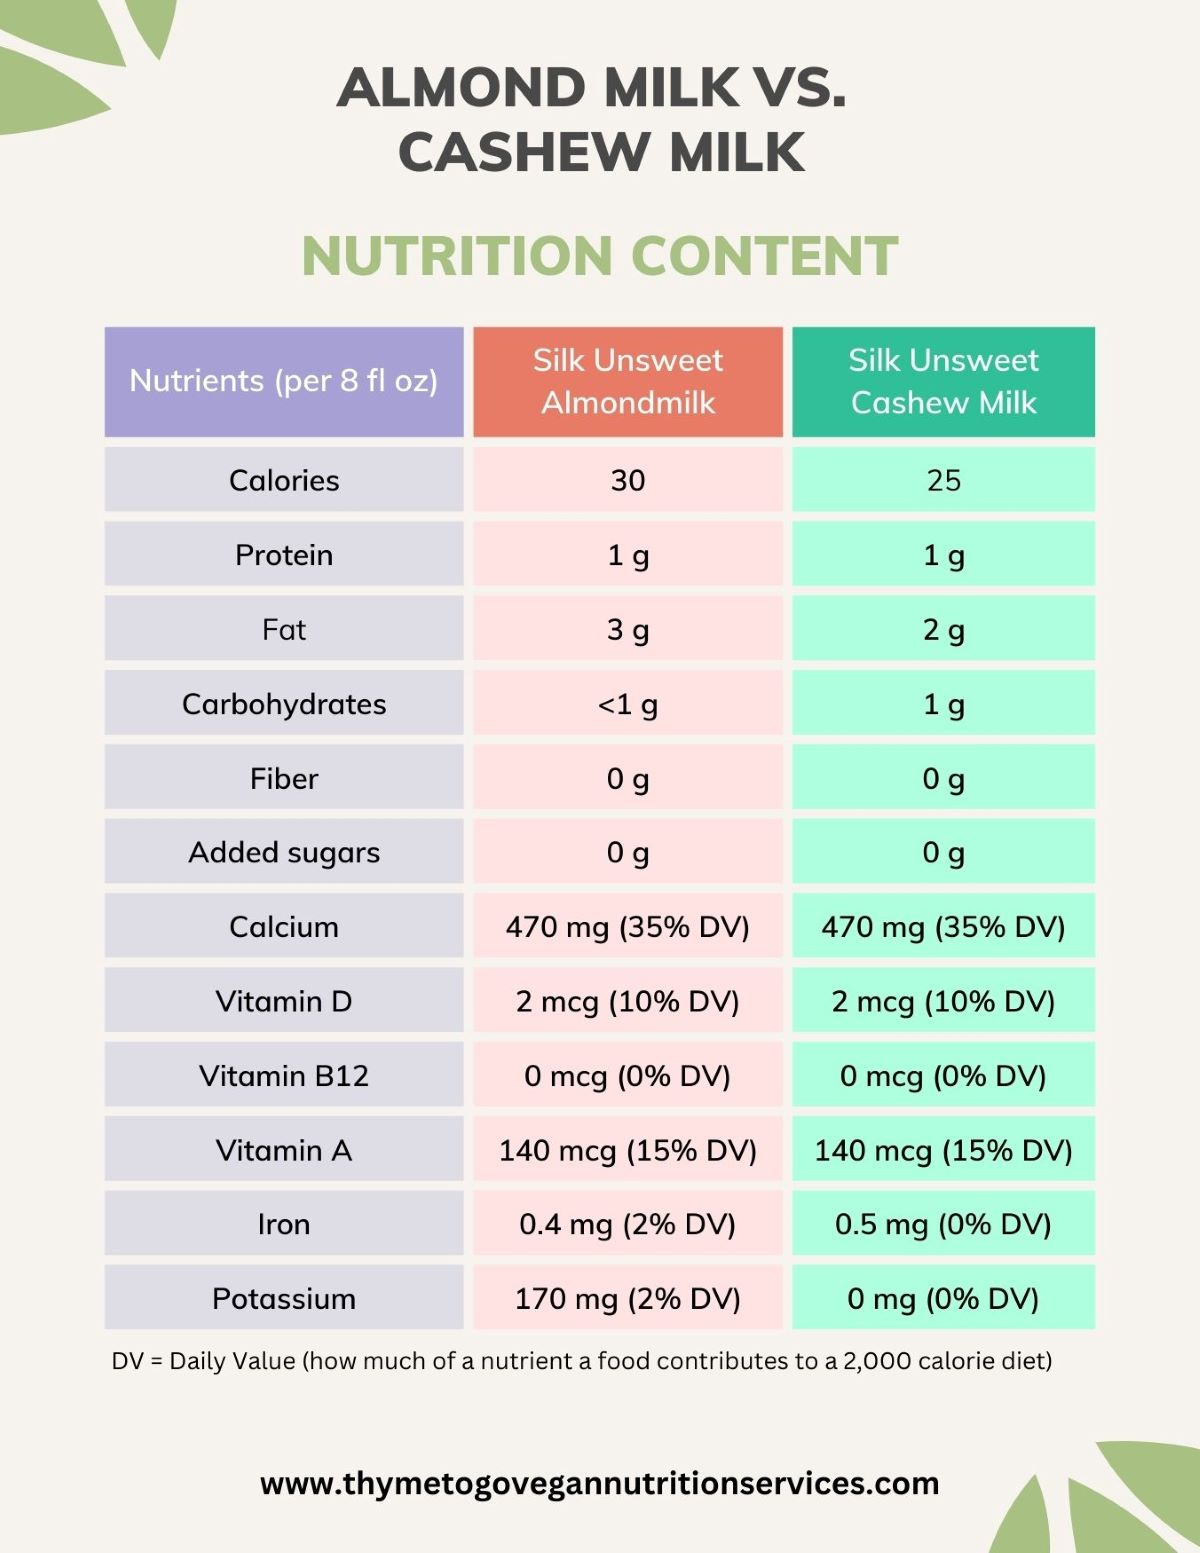 Table comparing the nutrition content of almond milk versus cashew milk